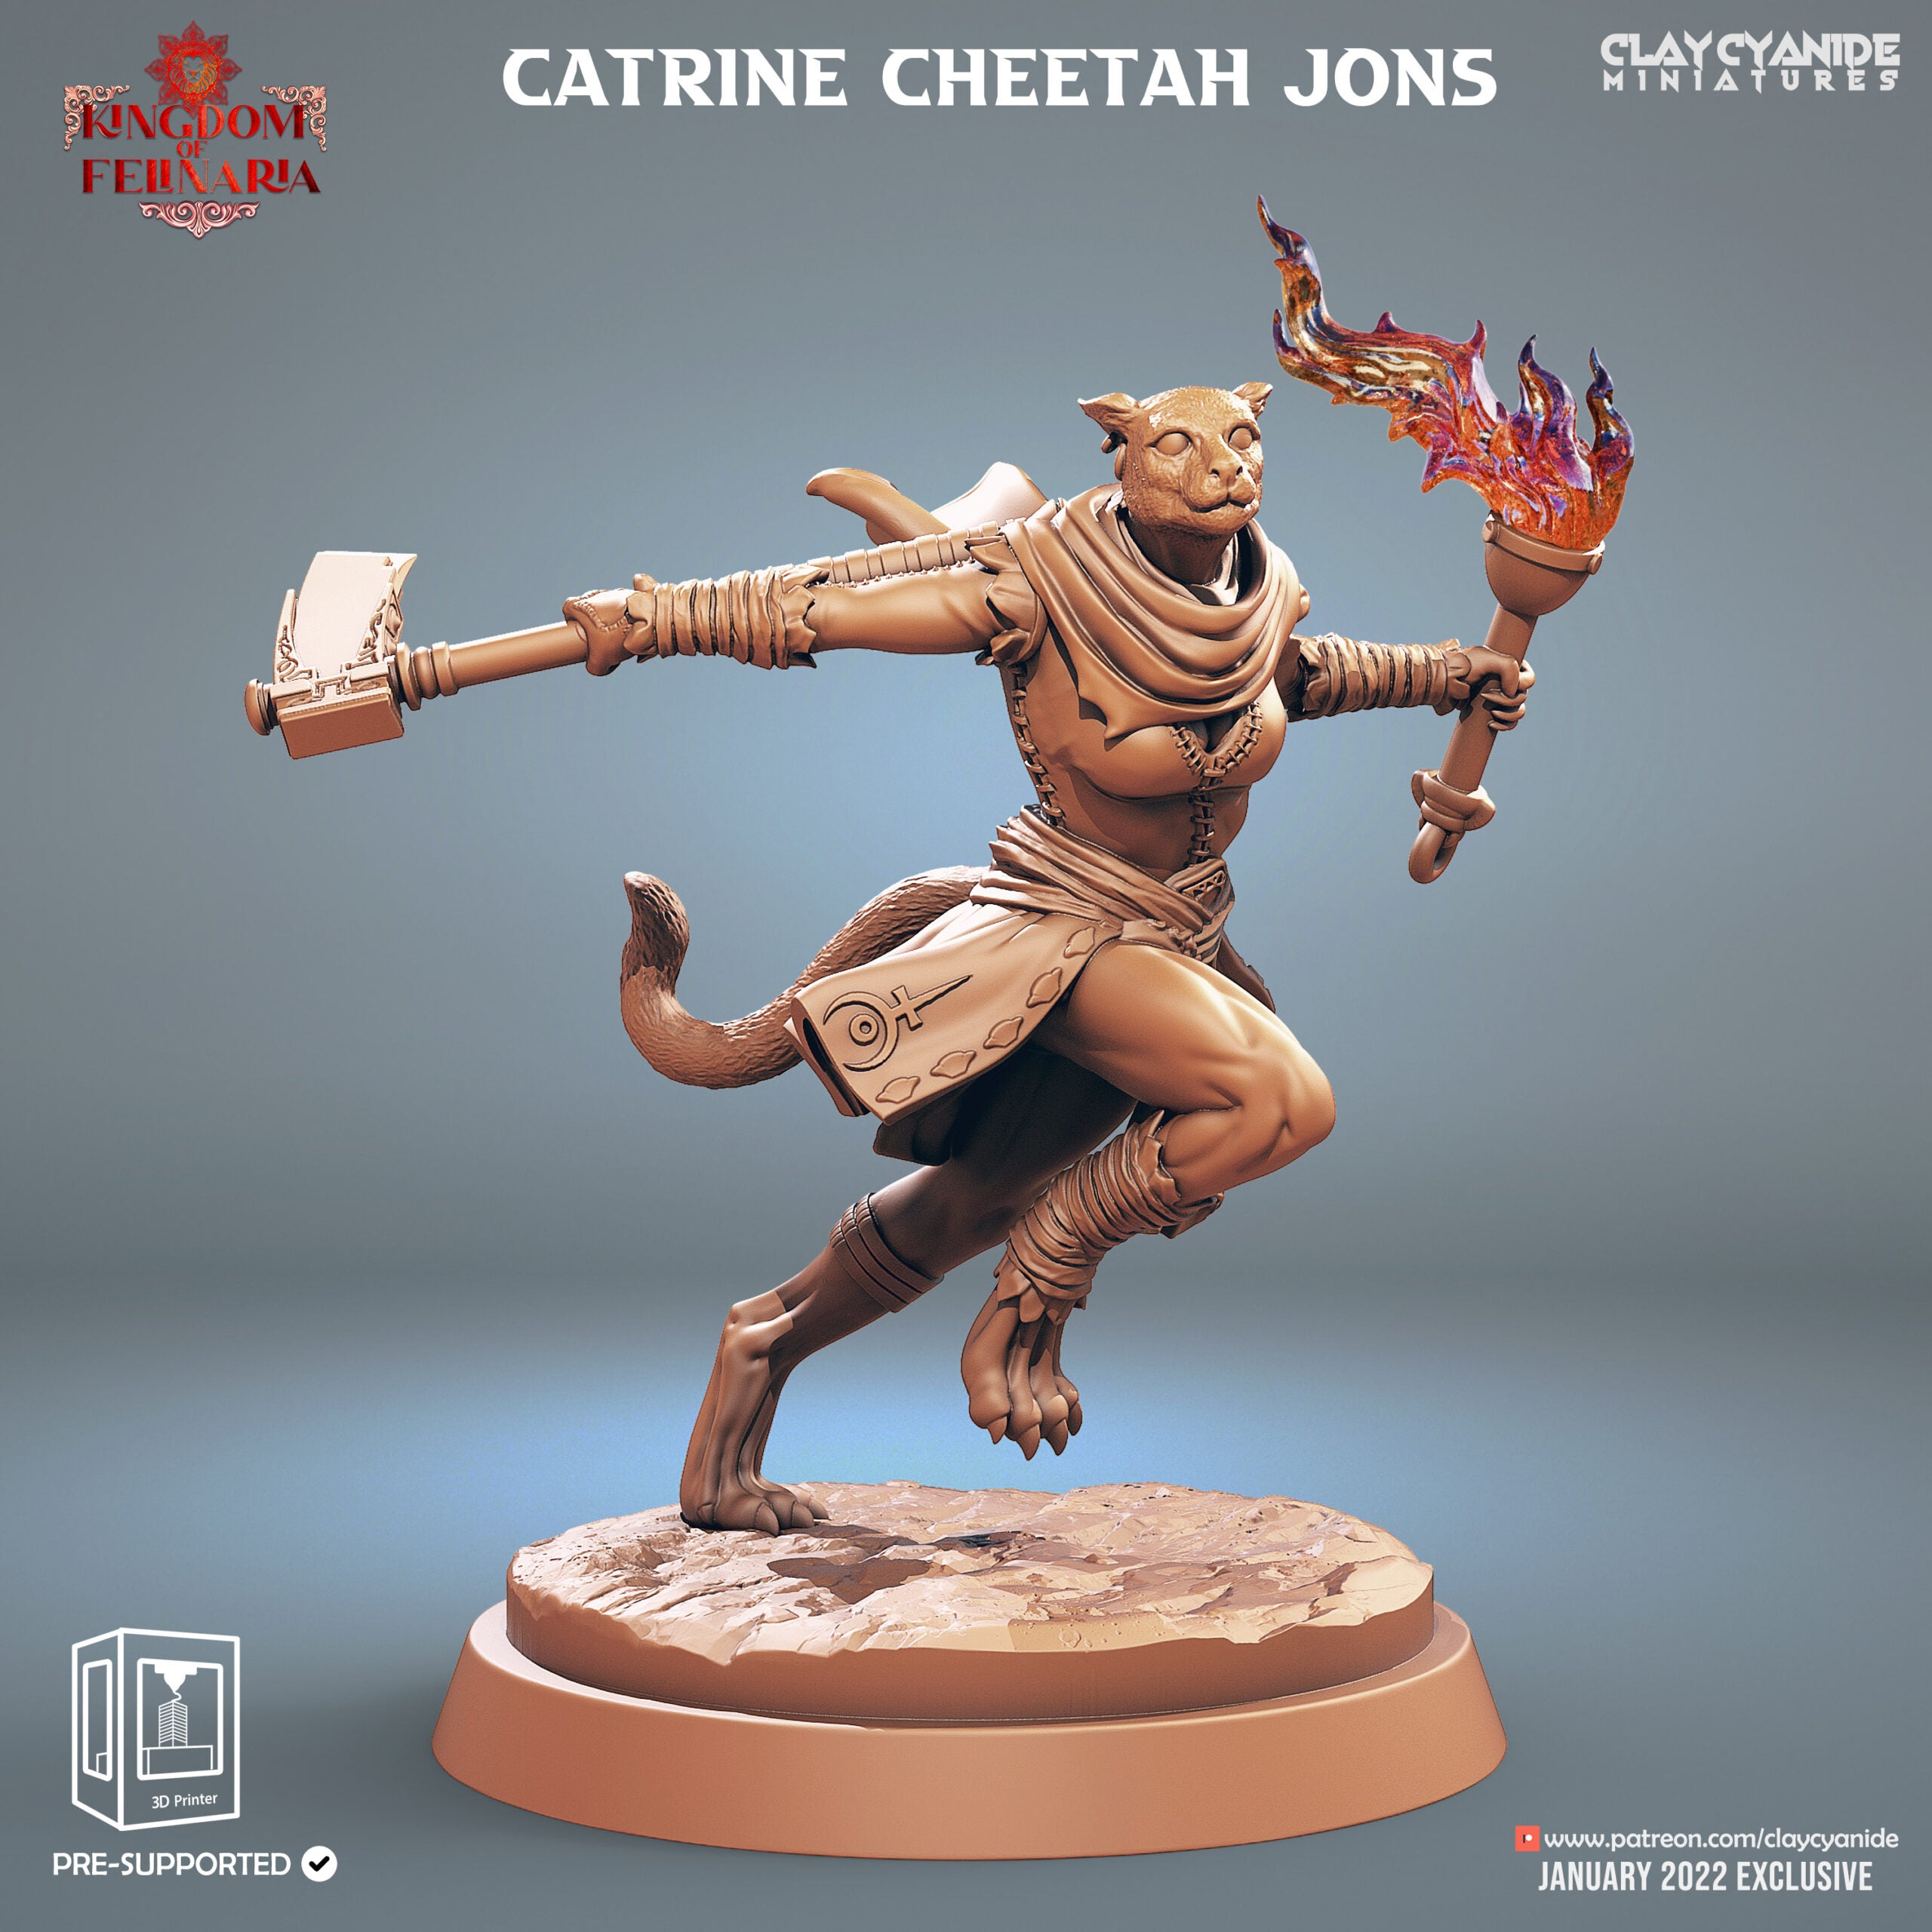 Catrine Cheetah Jons